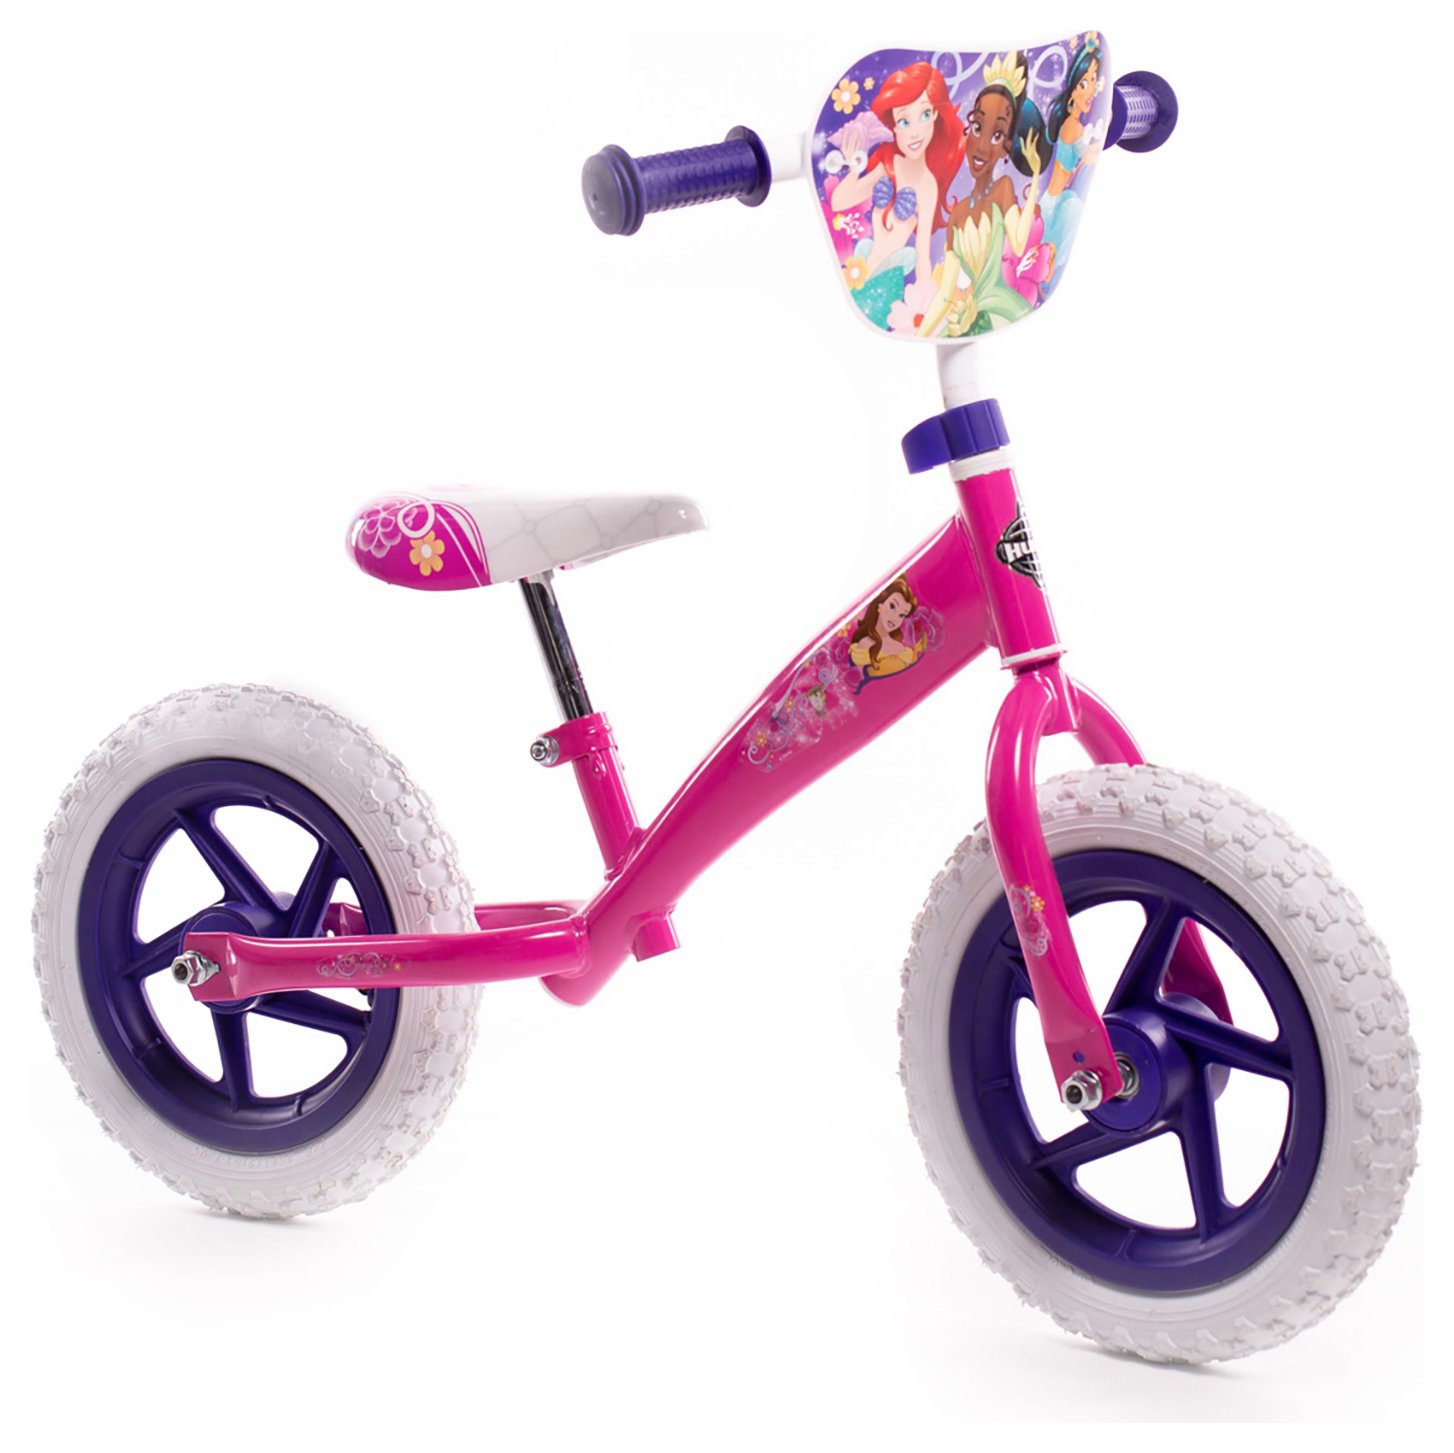 Huffy 12 inch Wheel Size Disney Princess Balance Bike